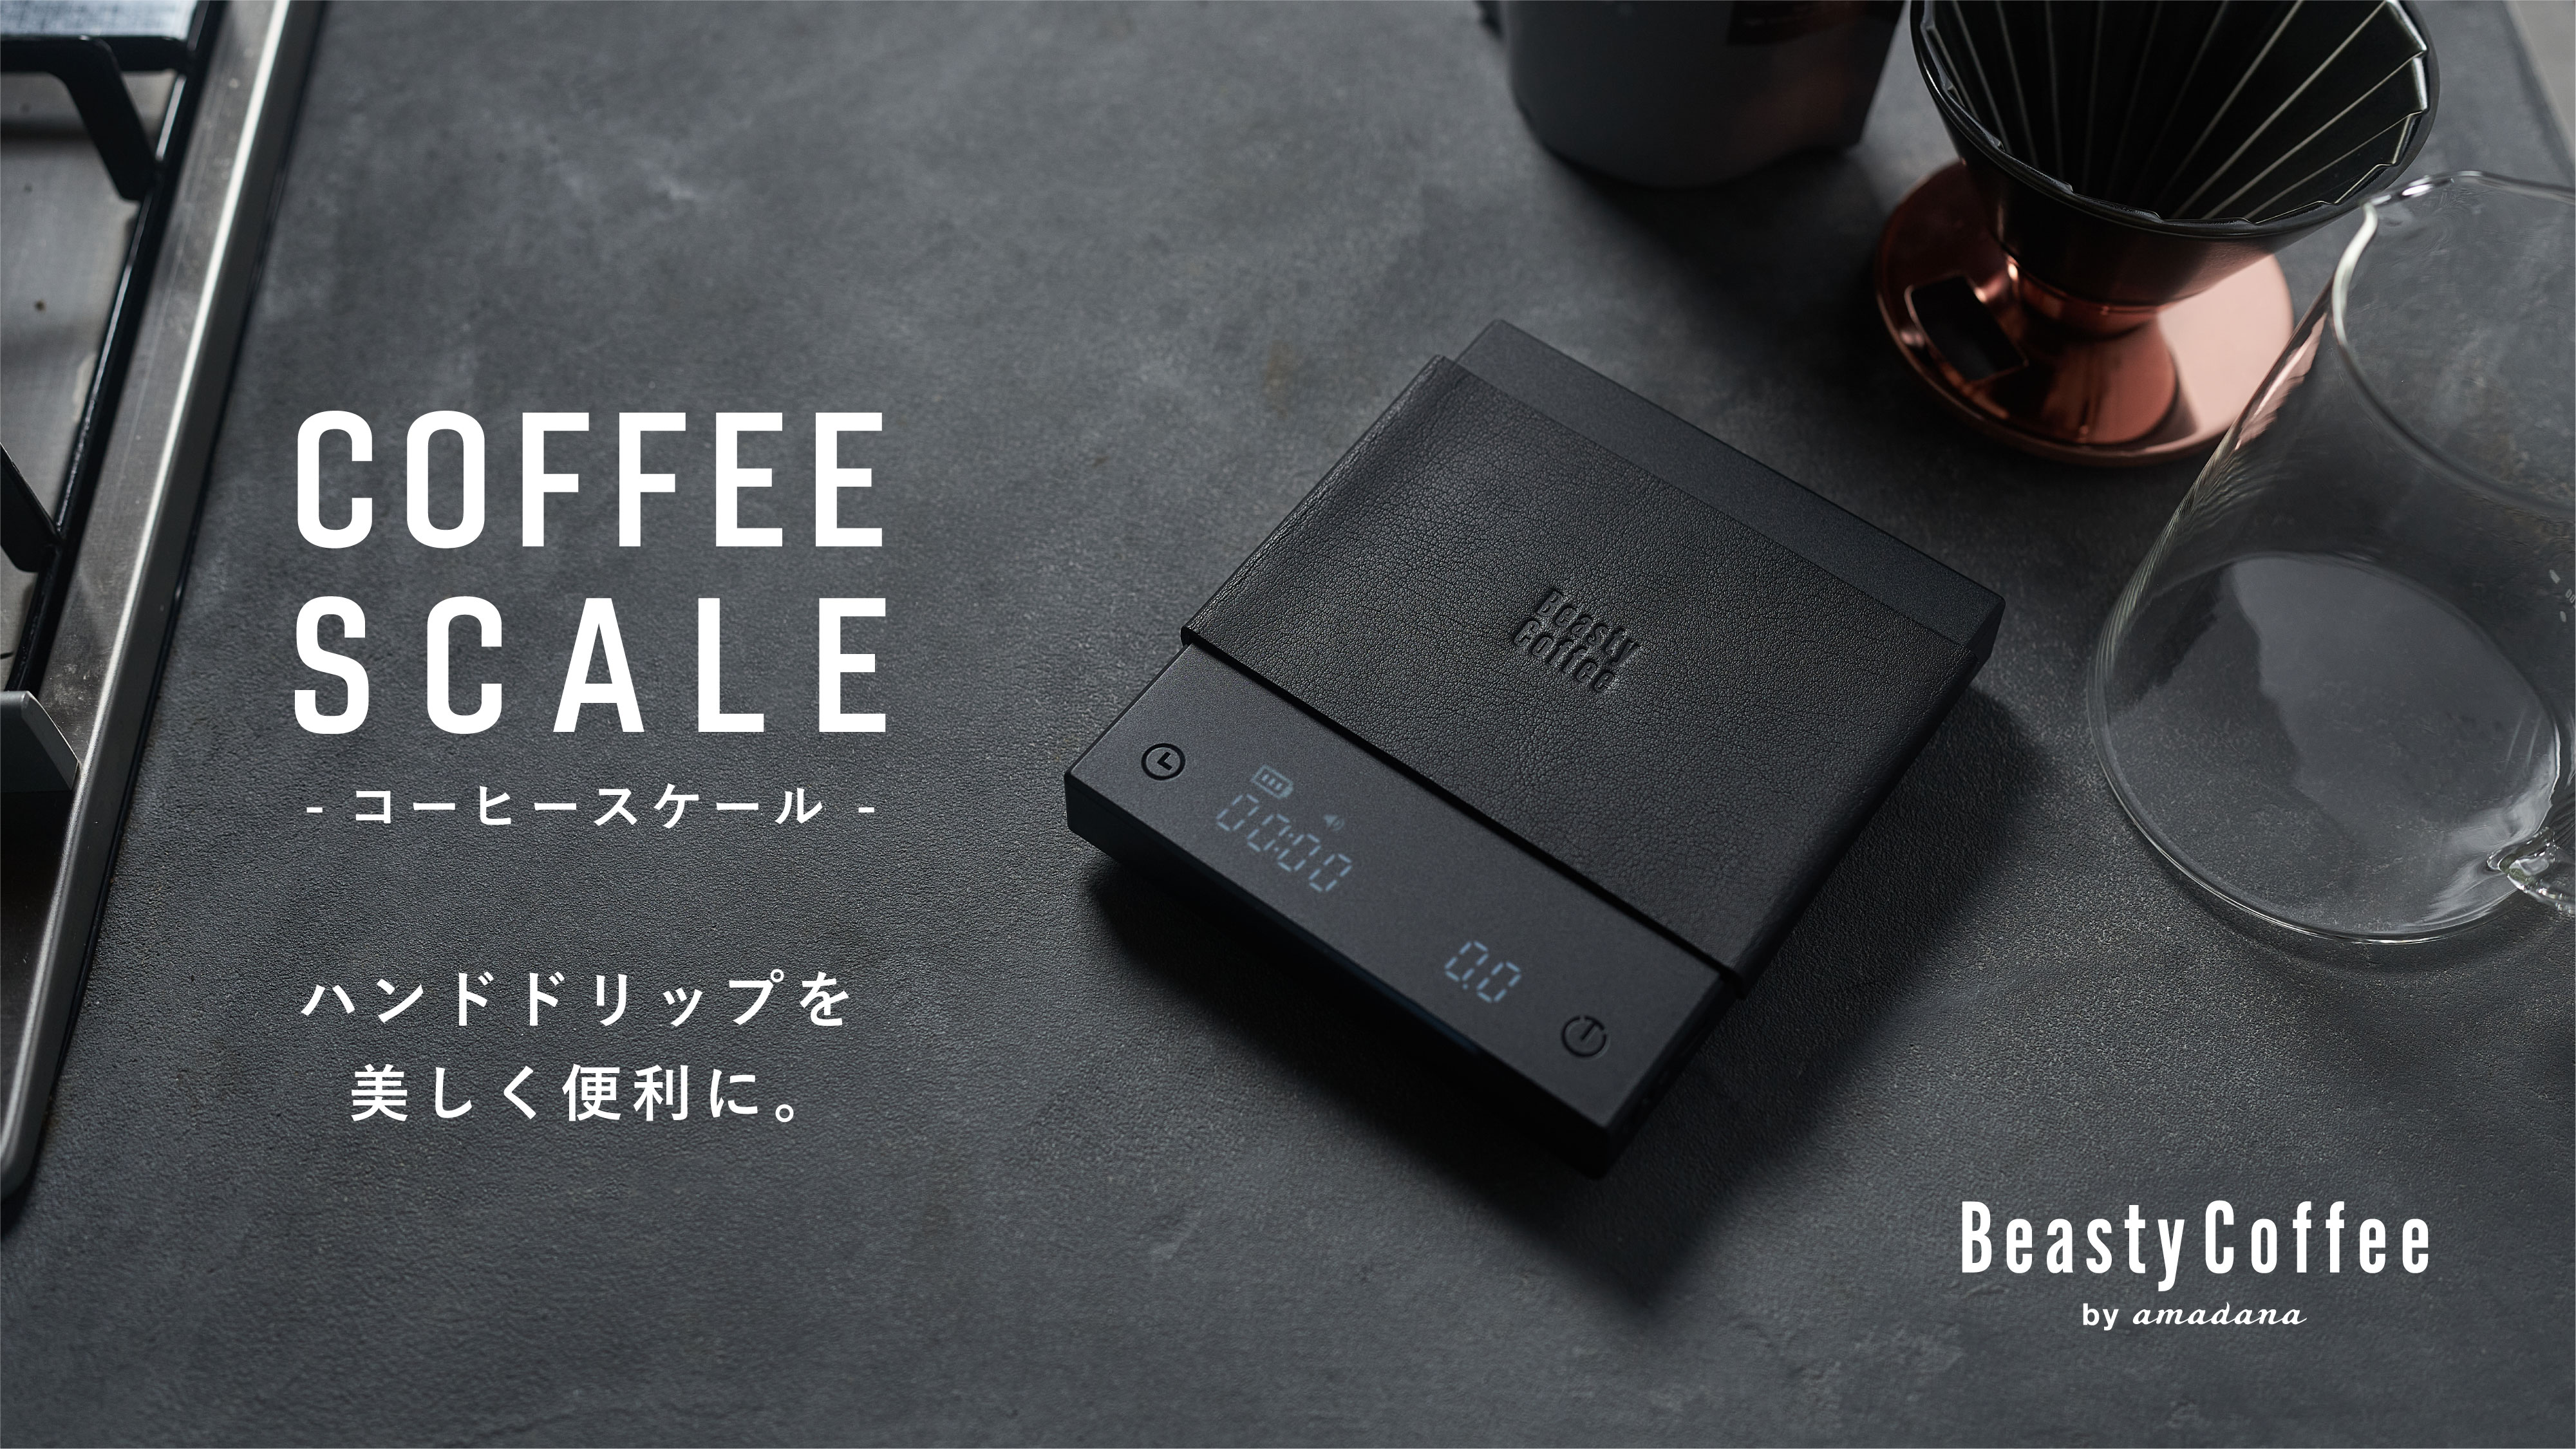 Beasty Coffee by amadana が新製品コーヒースケールをGREEN FUNDING にてクラウドファンディングをスタート！